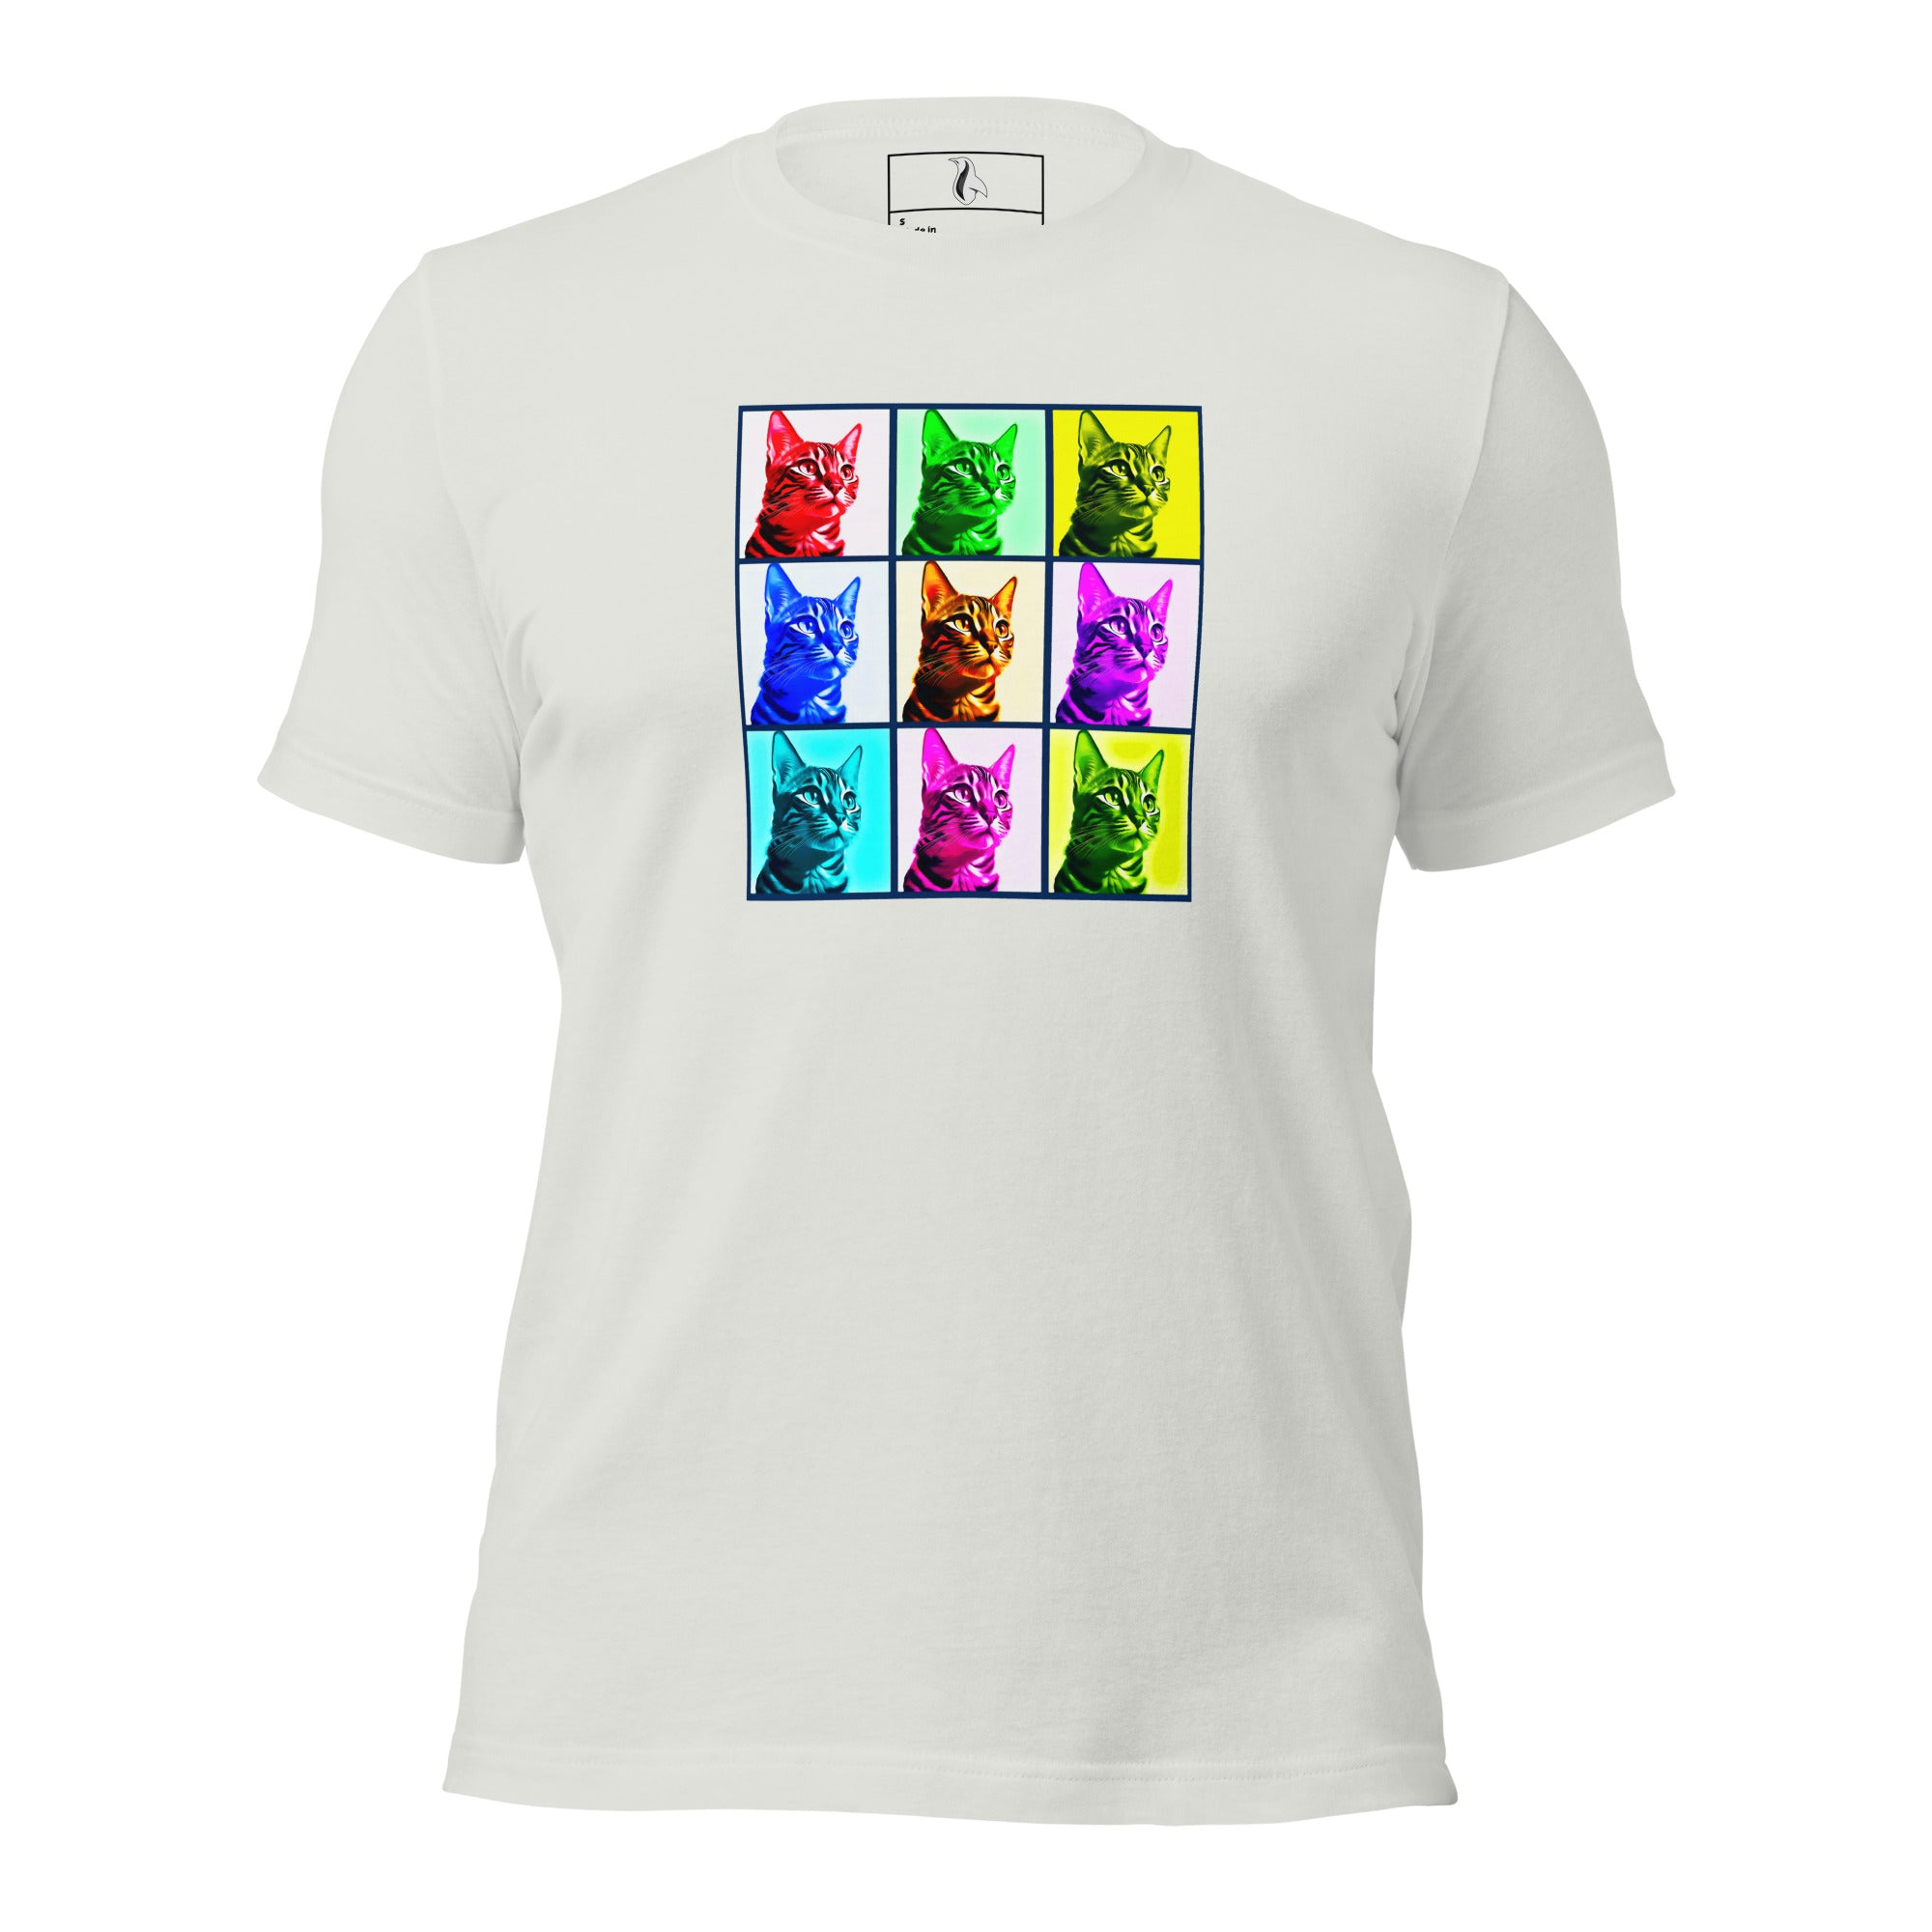 Warhol Cats Unisex t-shirt